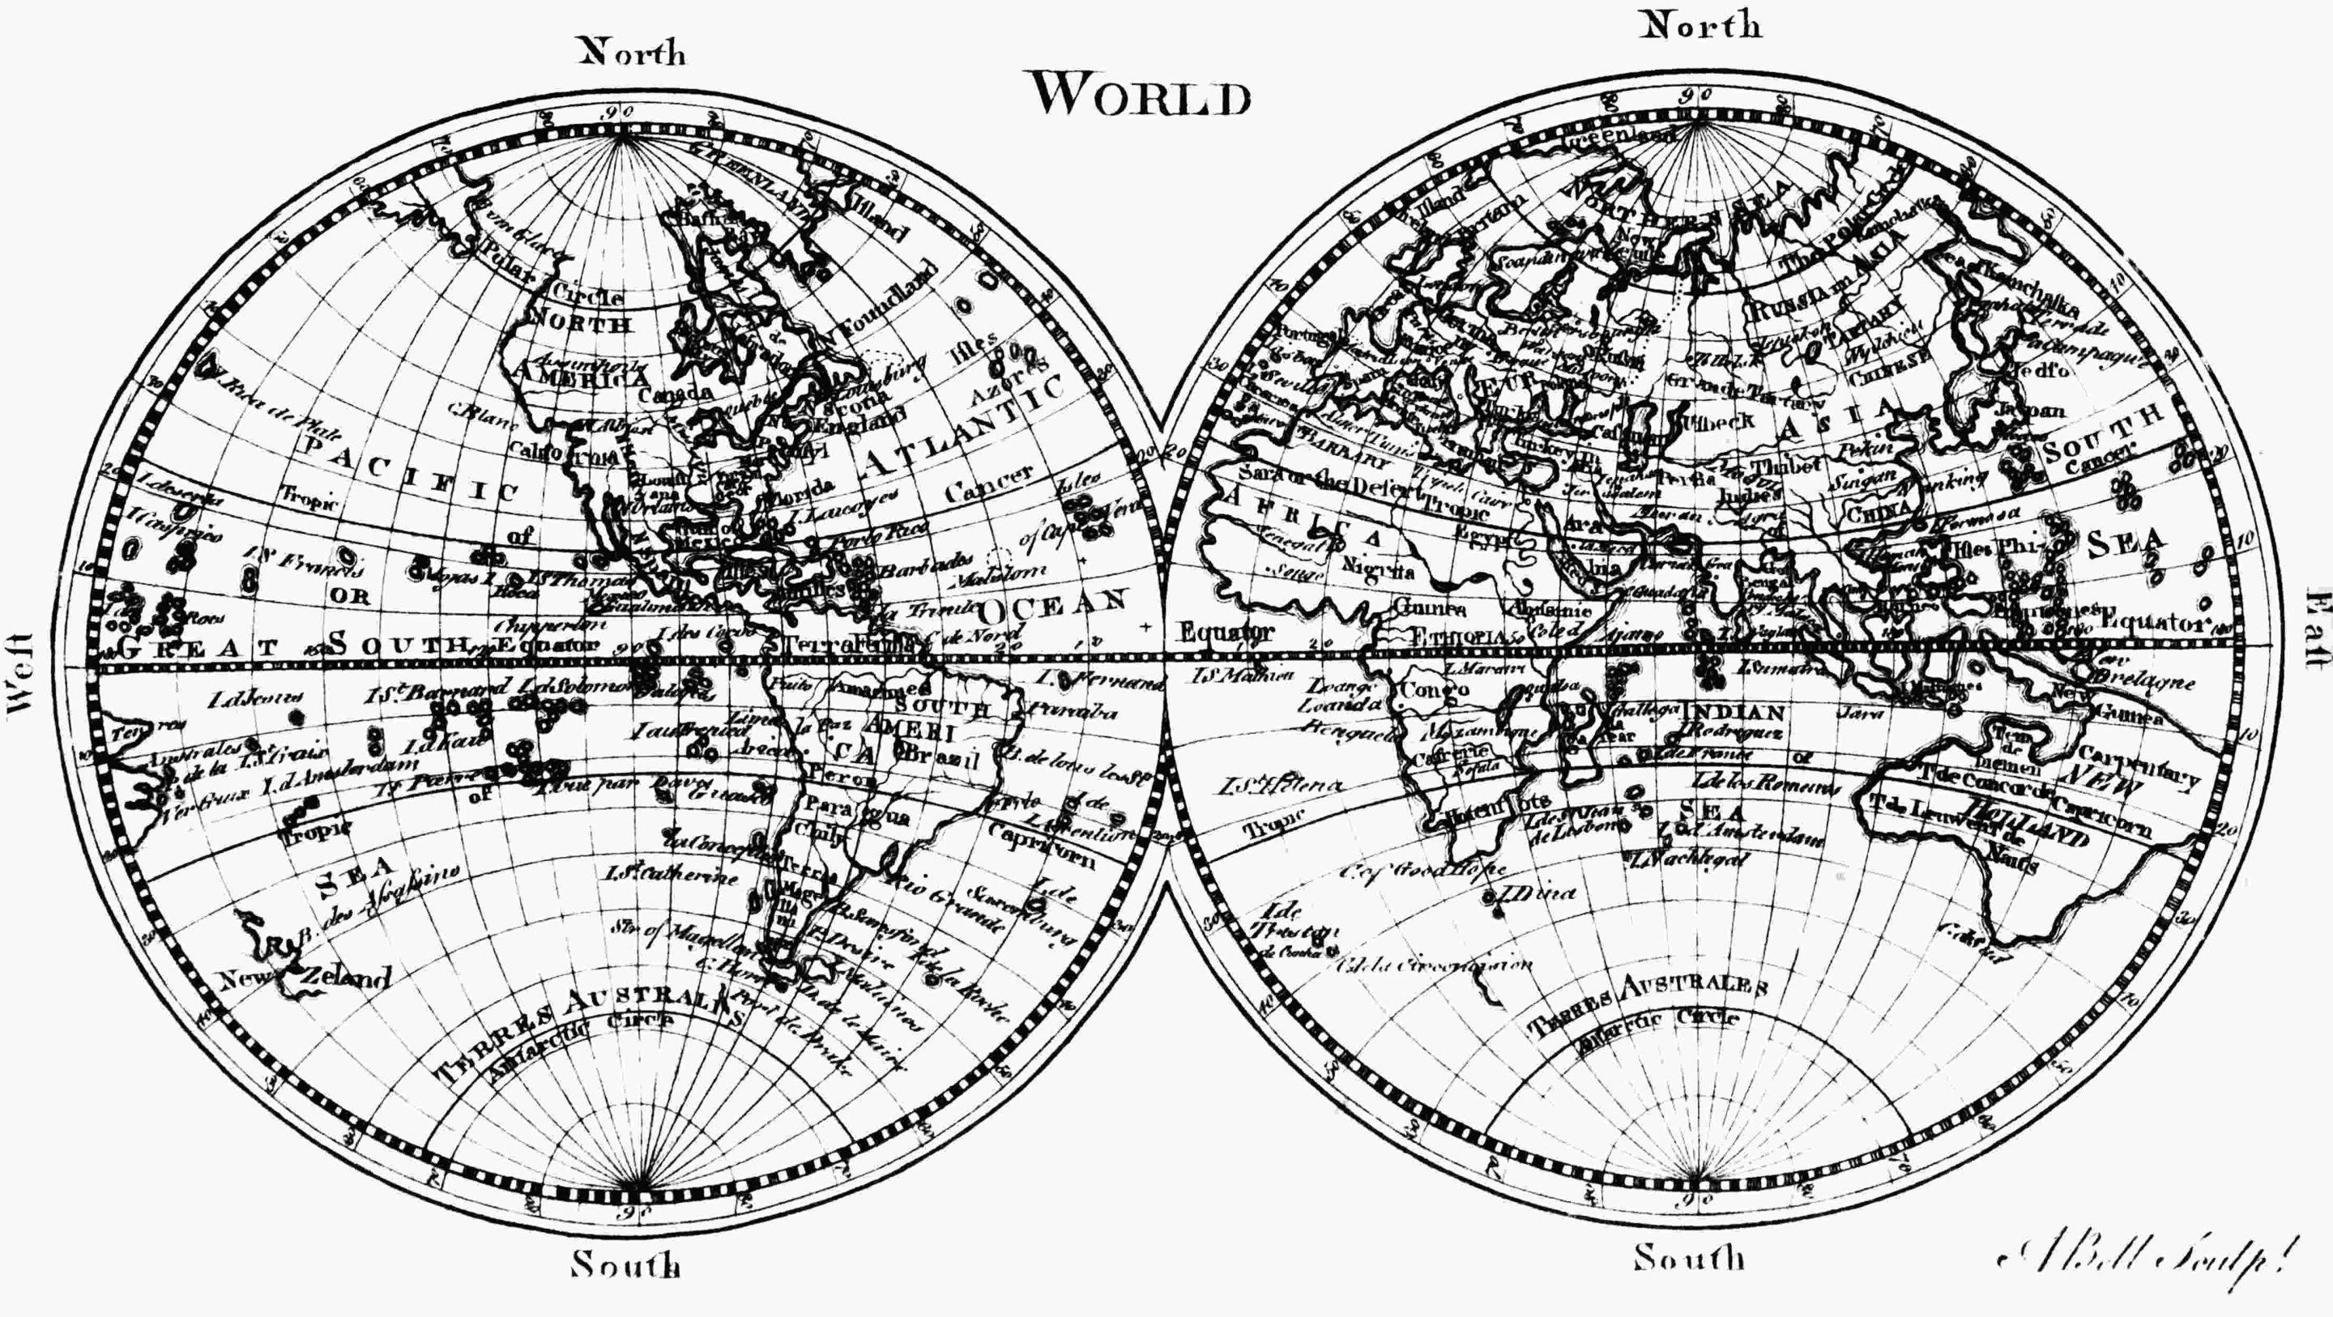 https://en.wikipedia.org/wiki/History_of_Antarctica#/media/File:Geography_world_map.jpeg